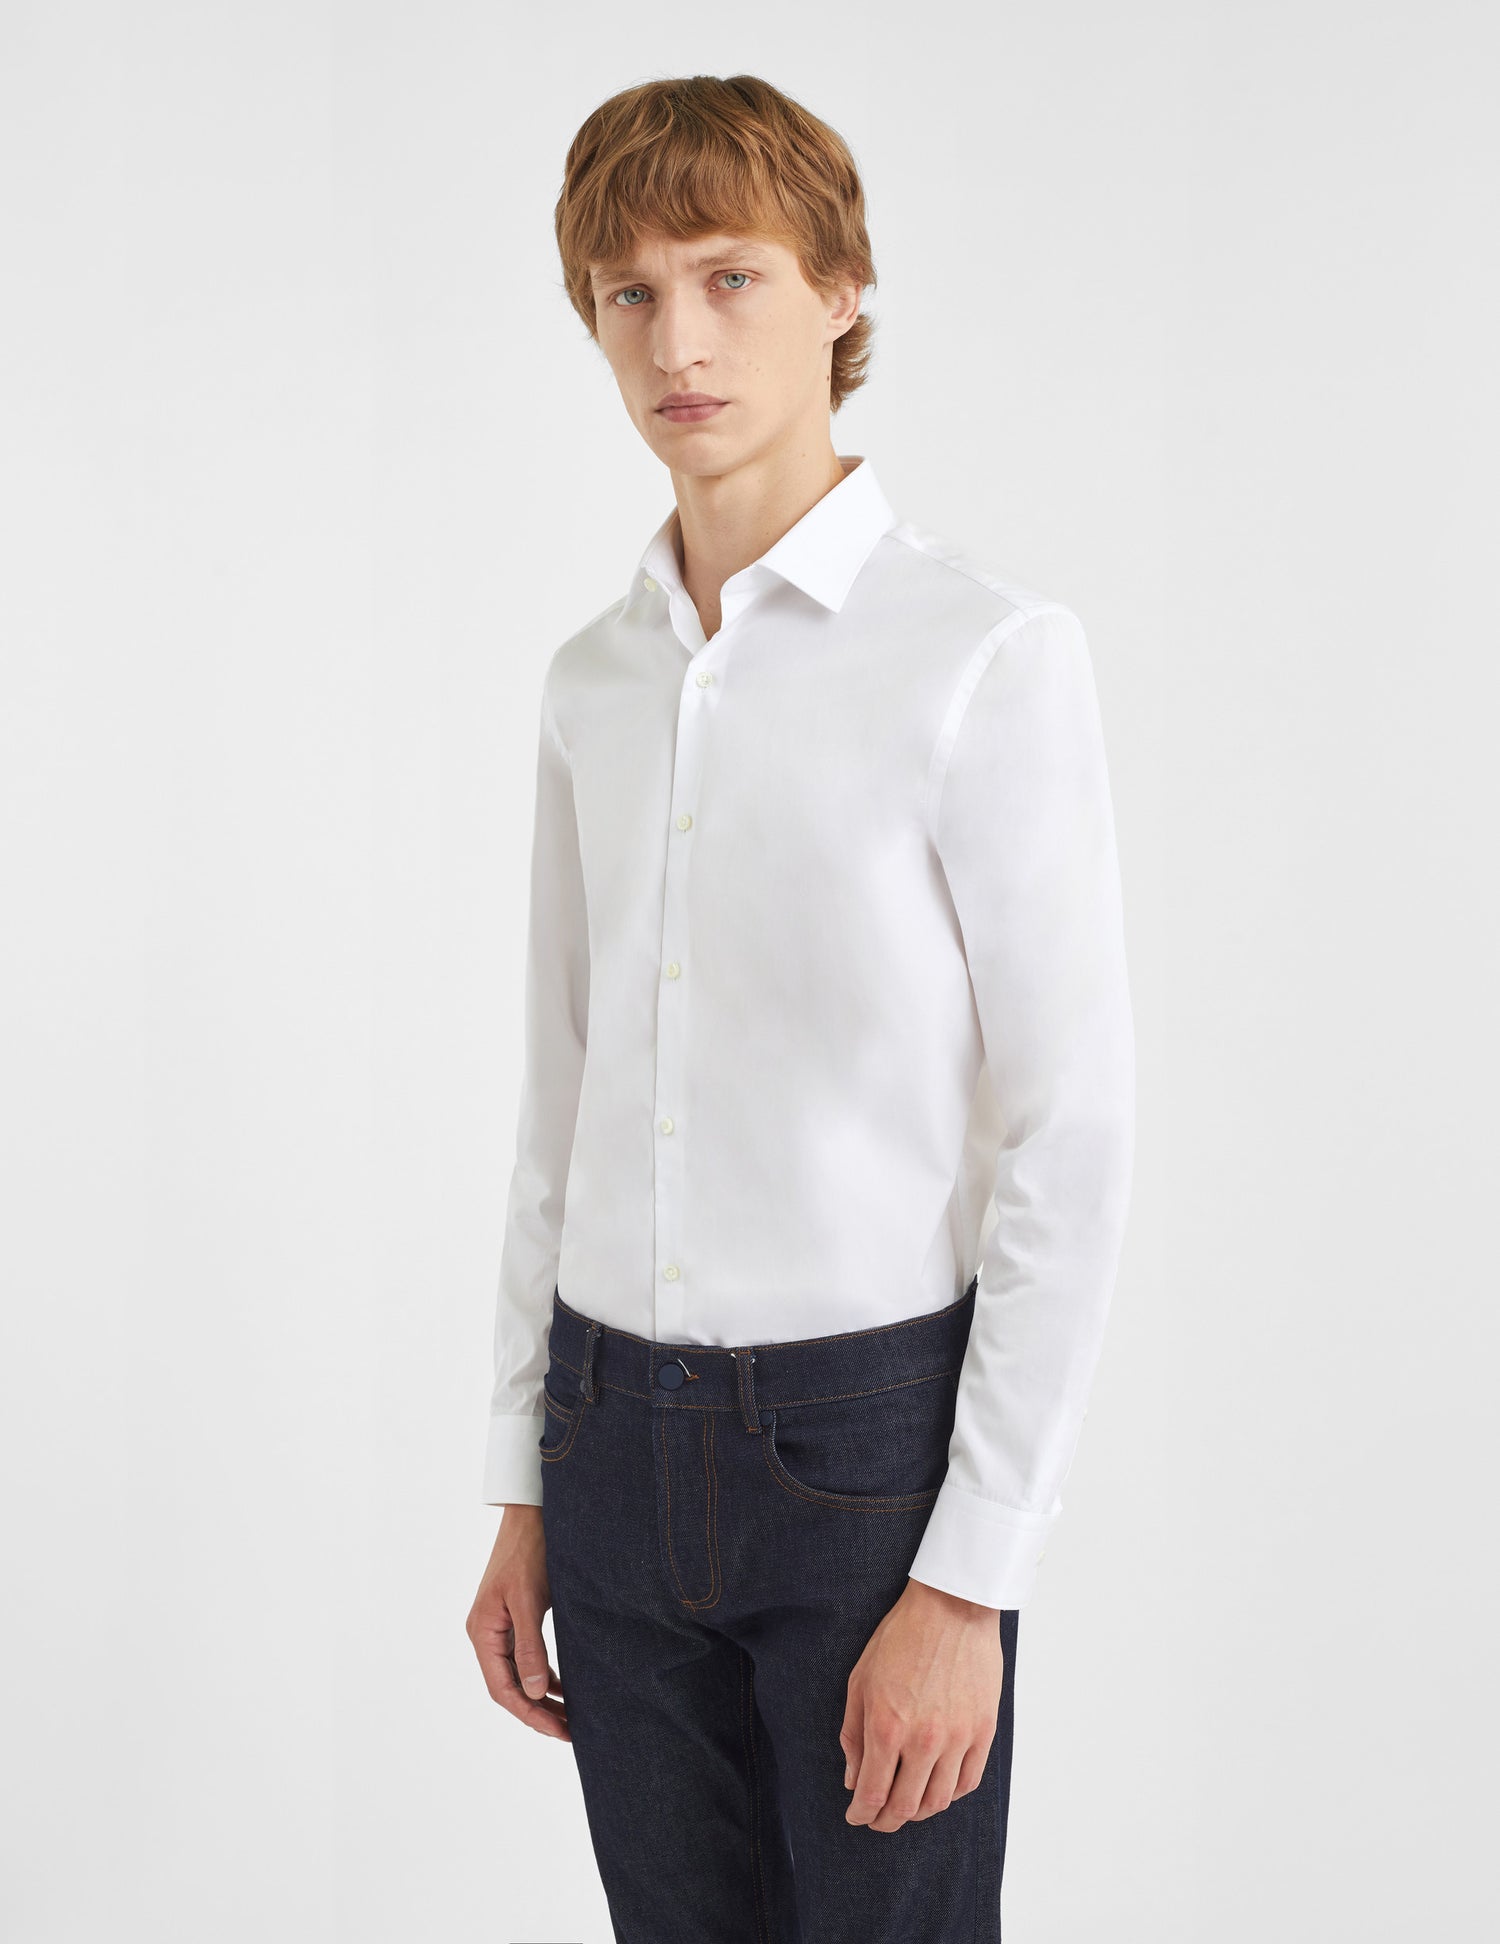 Semi-fitted white Prestige shirt - Poplin - Figaret Collar#3